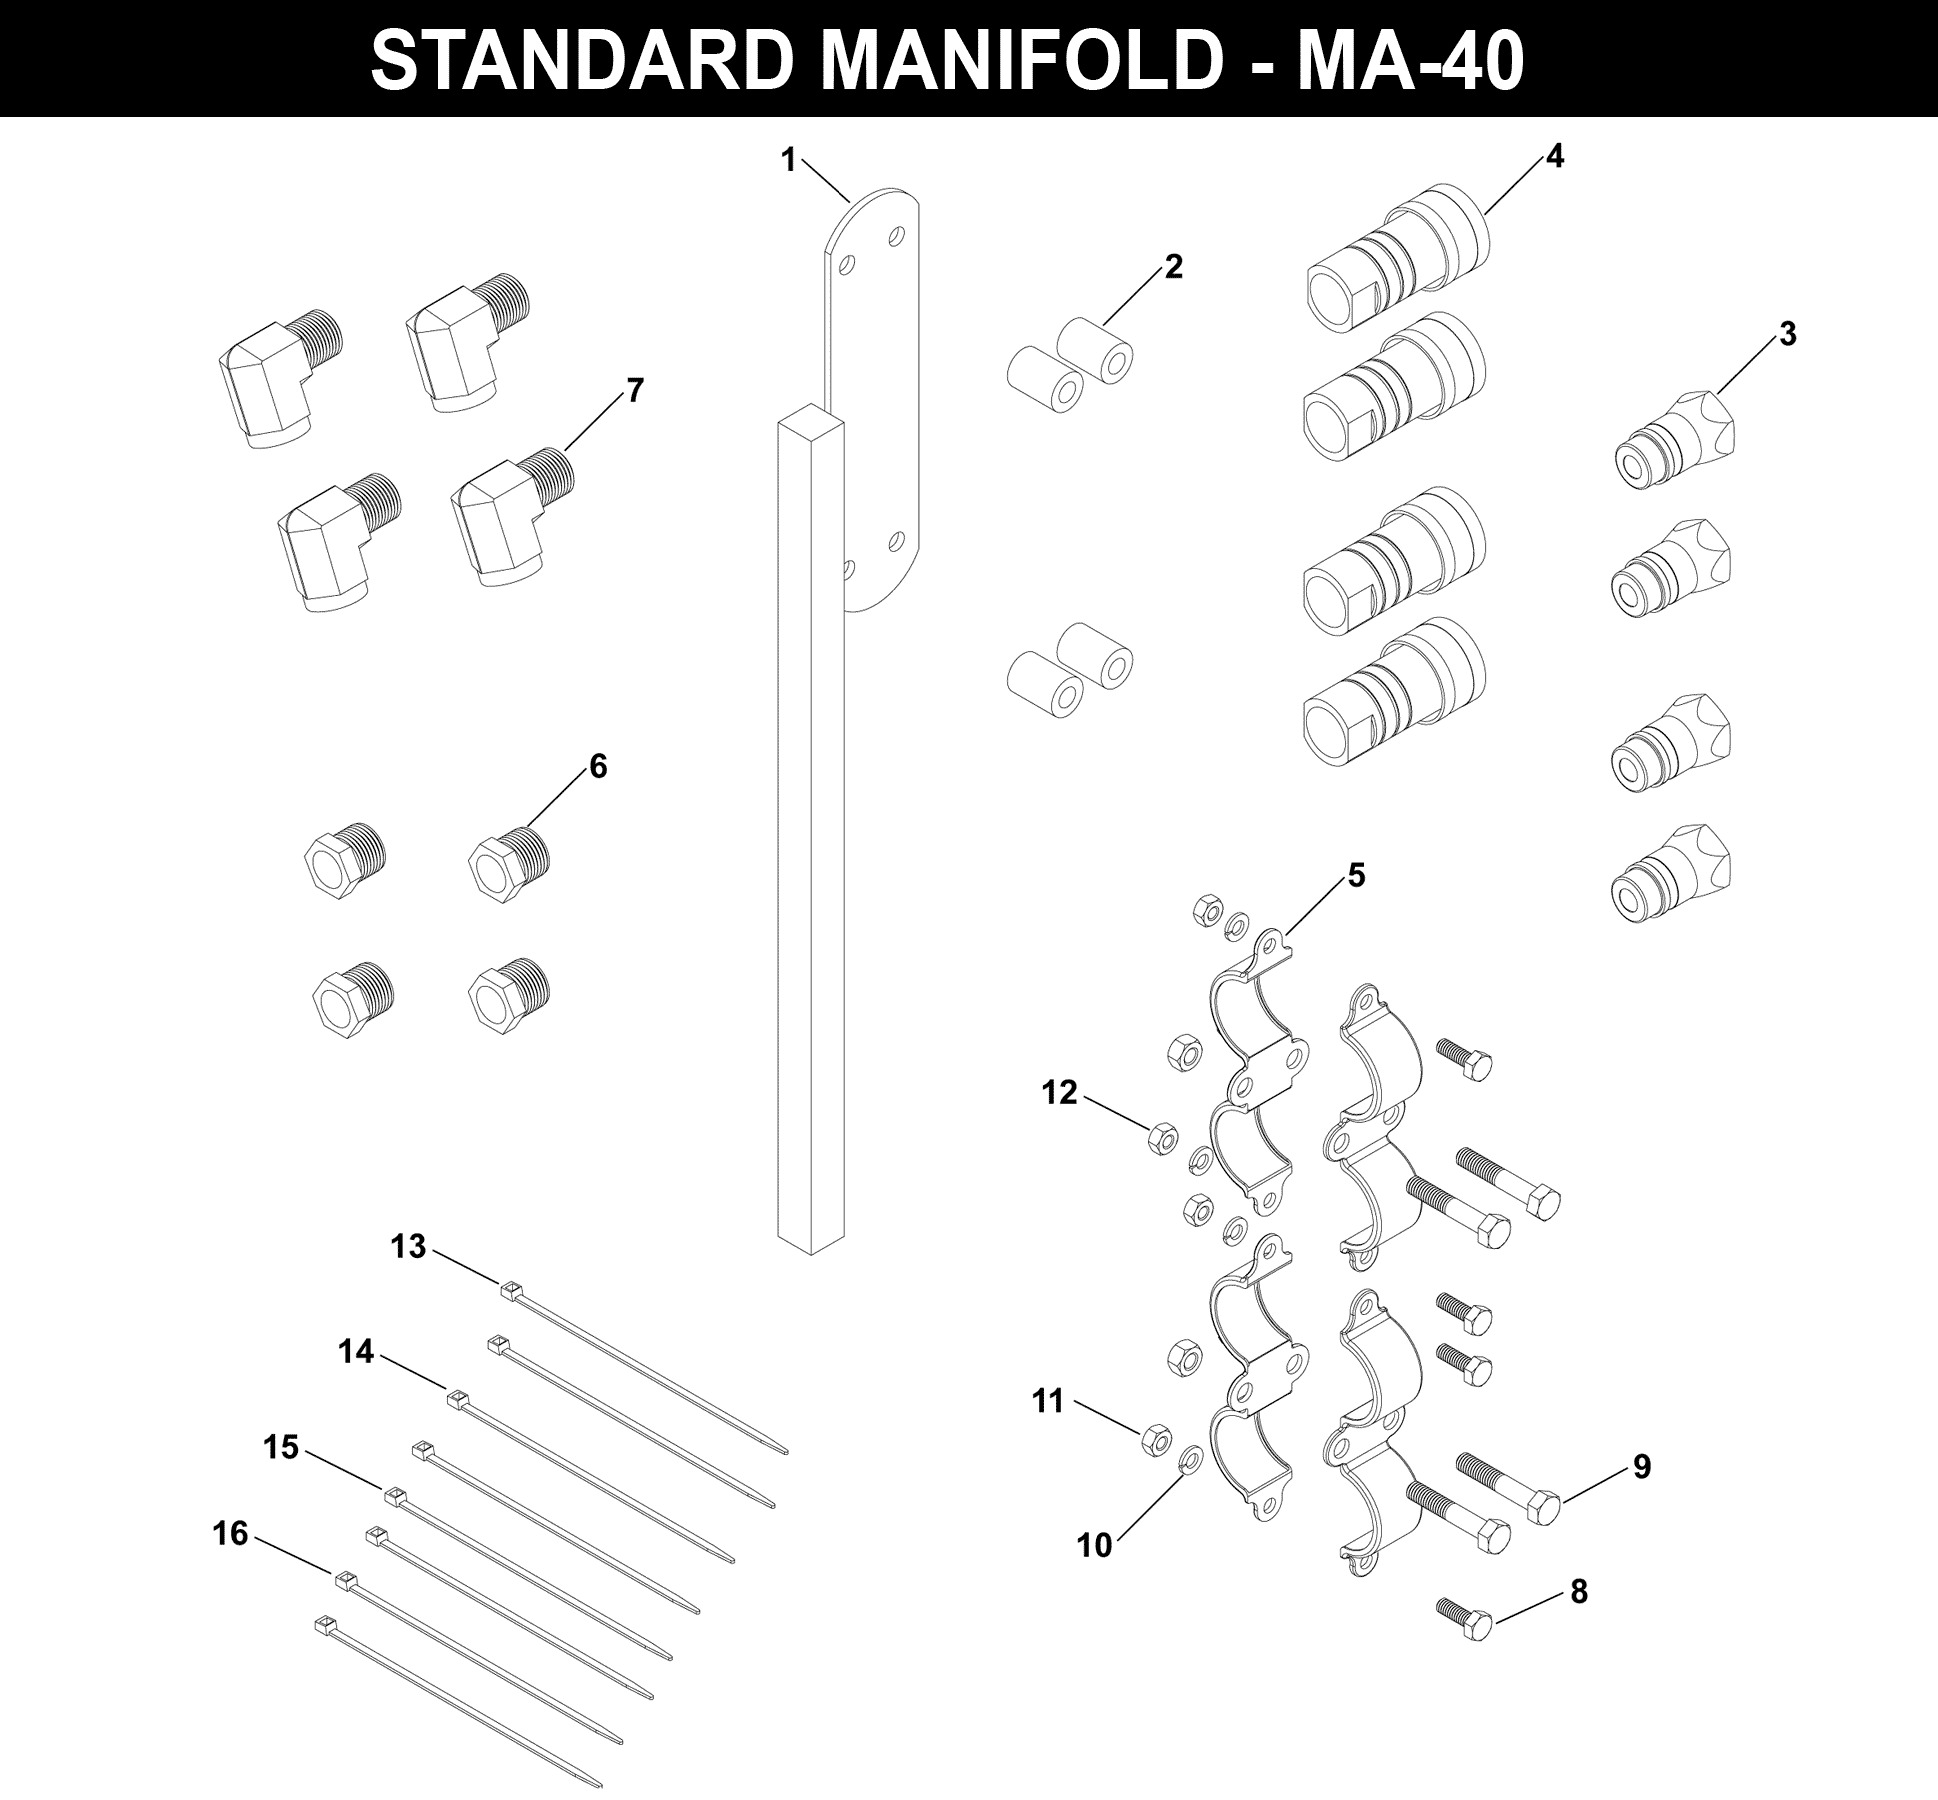 Standard Manifold - MA-40